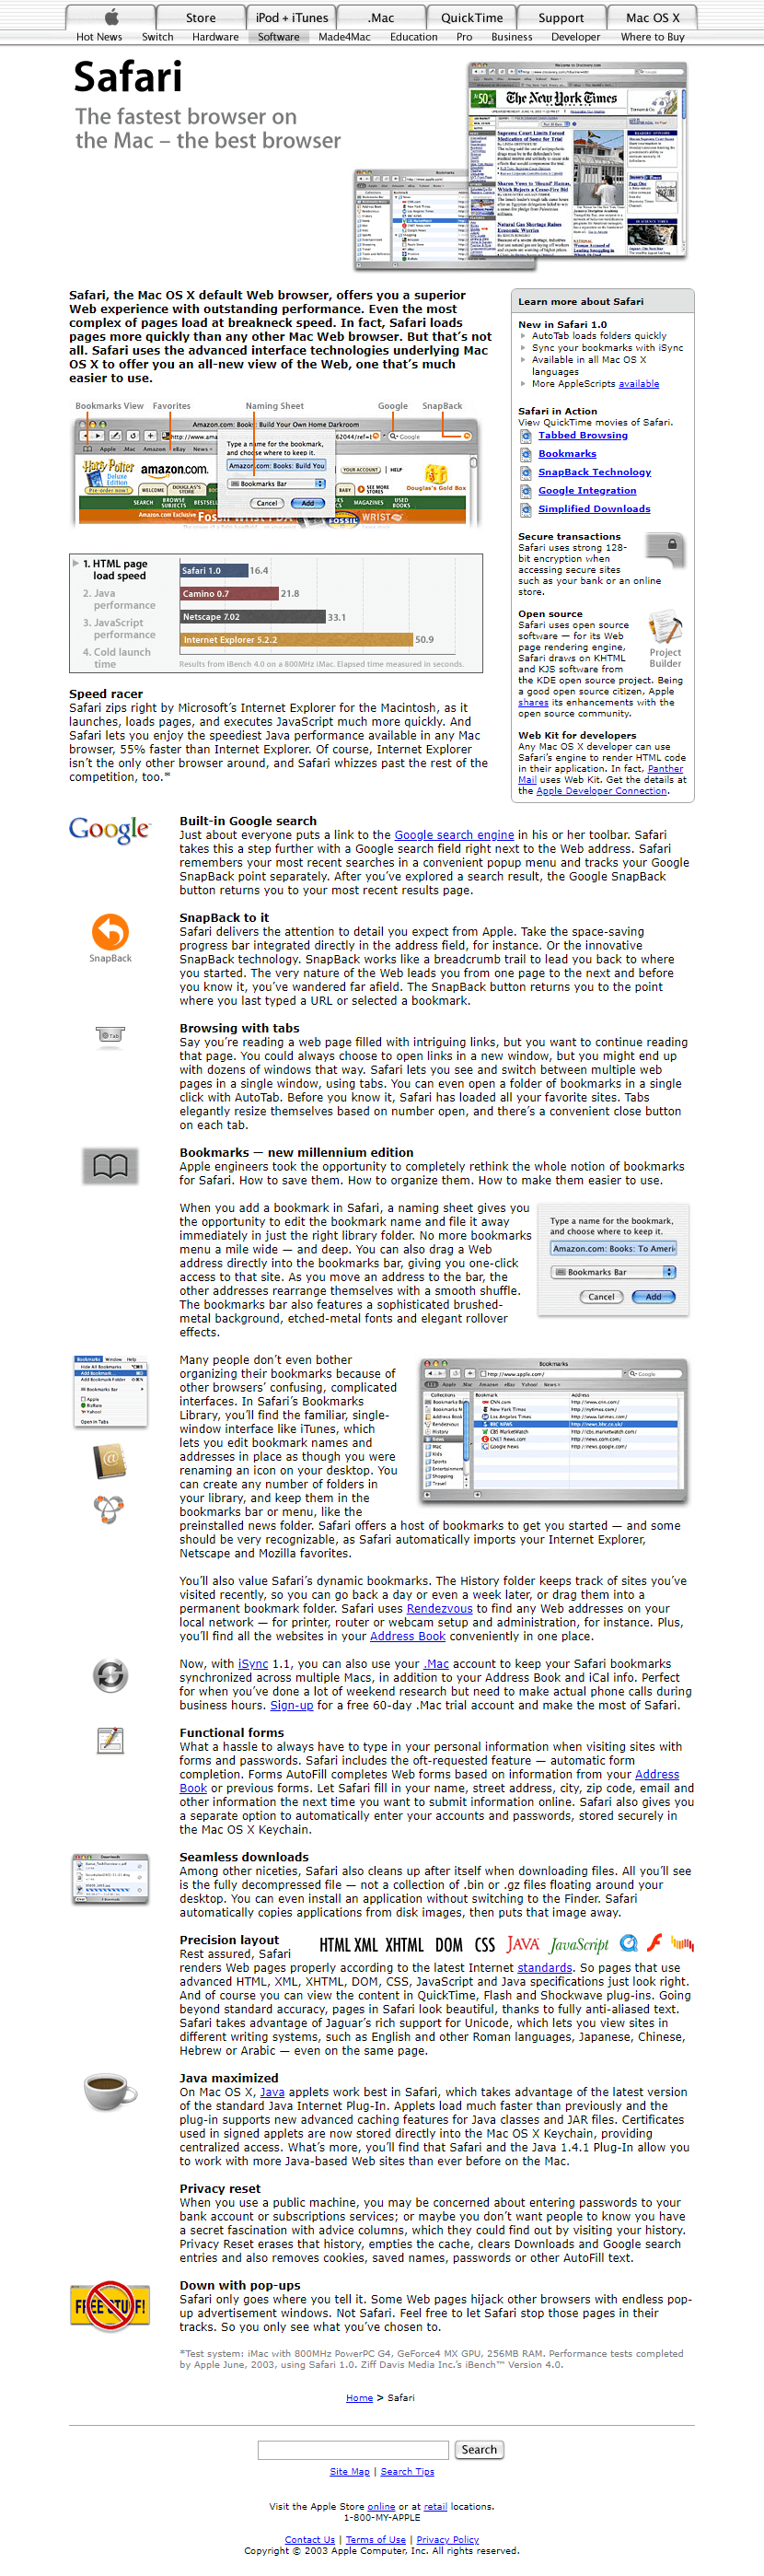 Apple.com and Safari 1.0 website in 2003